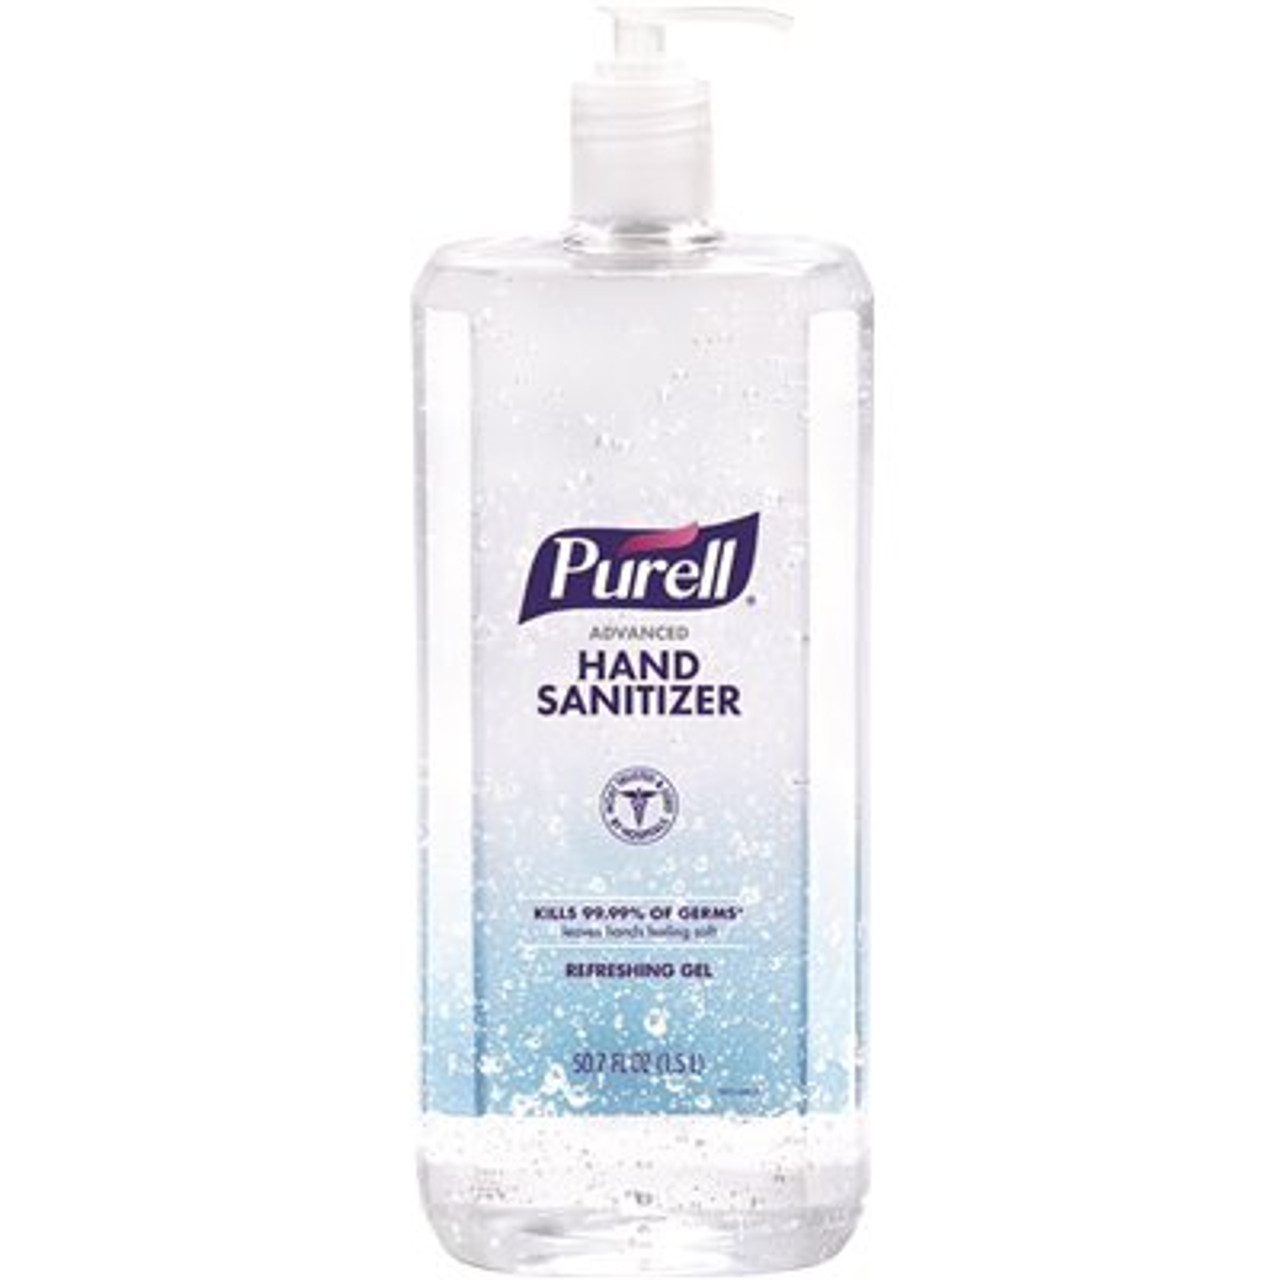 PURELL Advanced Hand Sanitizer Refreshing Gel, Clean Scent, 1.5 Liter Pump Bottle (Pack of 4) - 5015-04